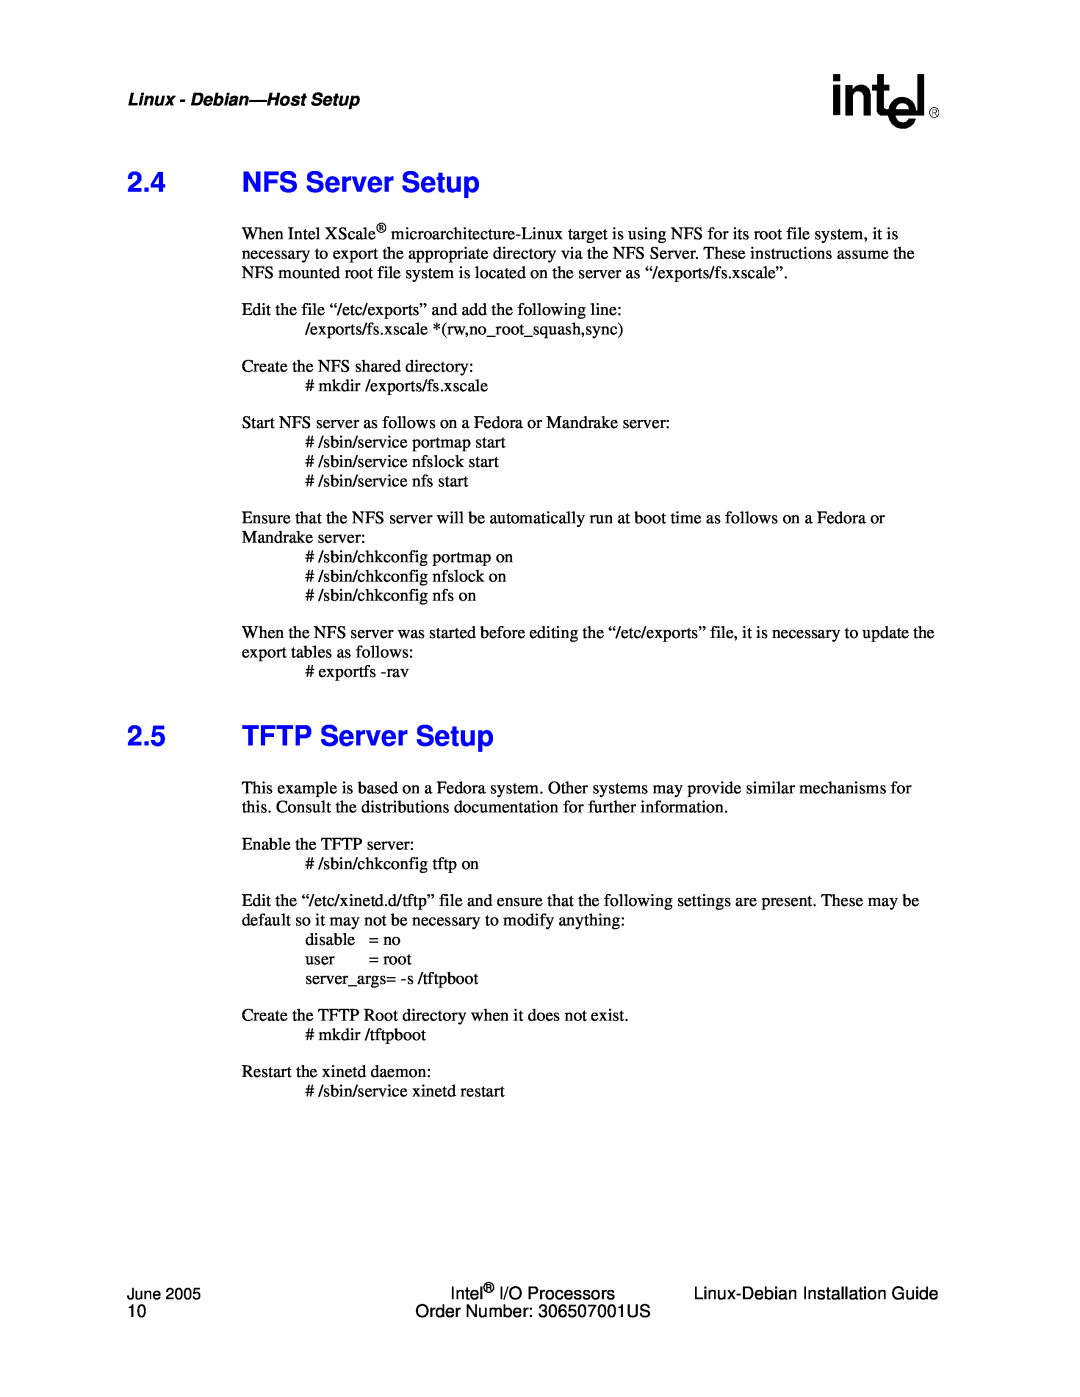 Intel I/O Processor manual 2.4NFS Server Setup, 2.5TFTP Server Setup, Linux - Debian—HostSetup 